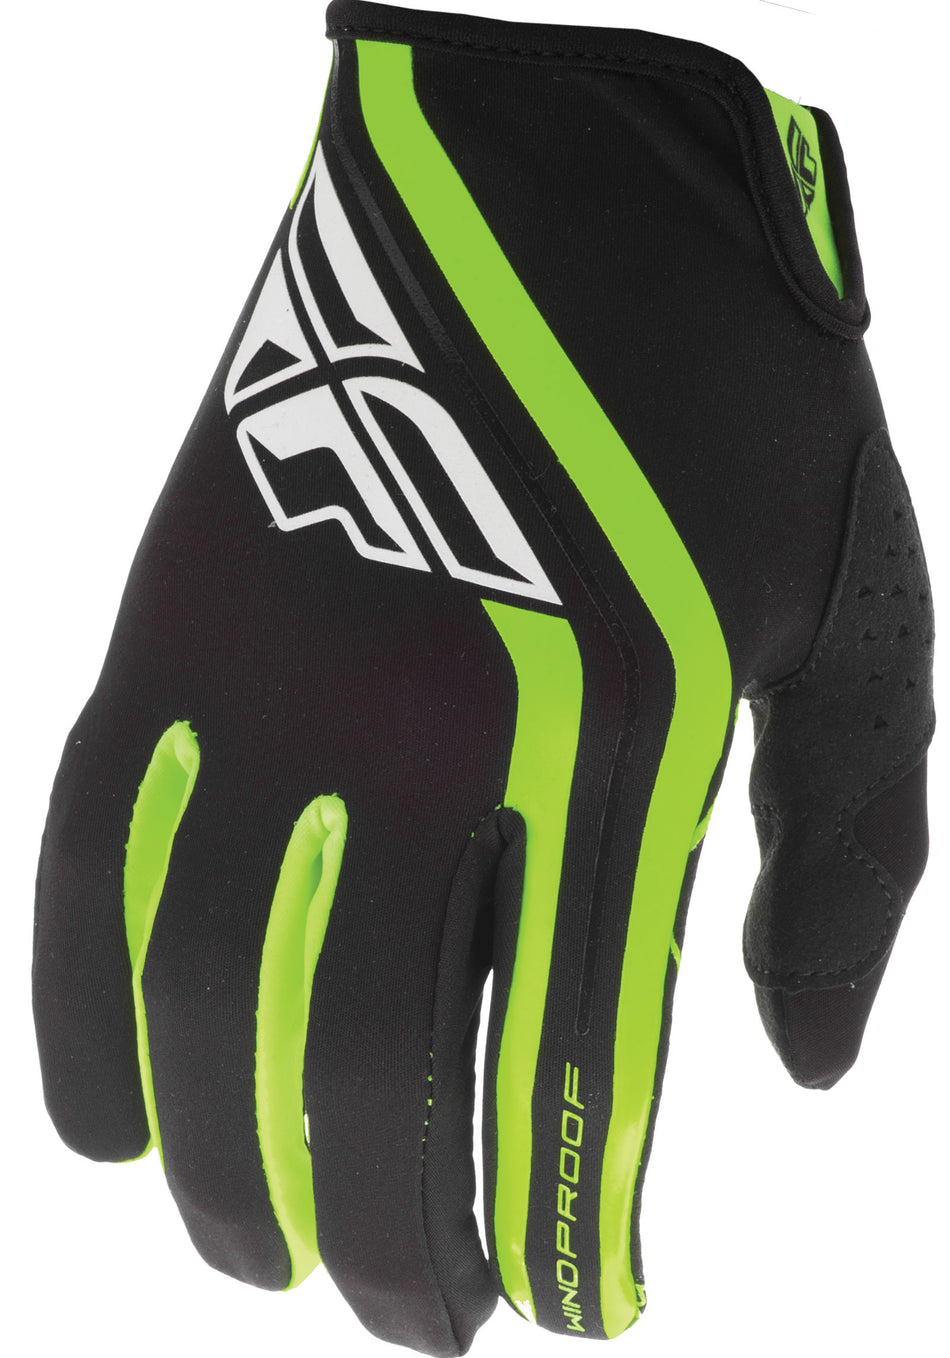 FLY RACING Windproof Gloves Black/Hi-Vis Sz 08 371-14908